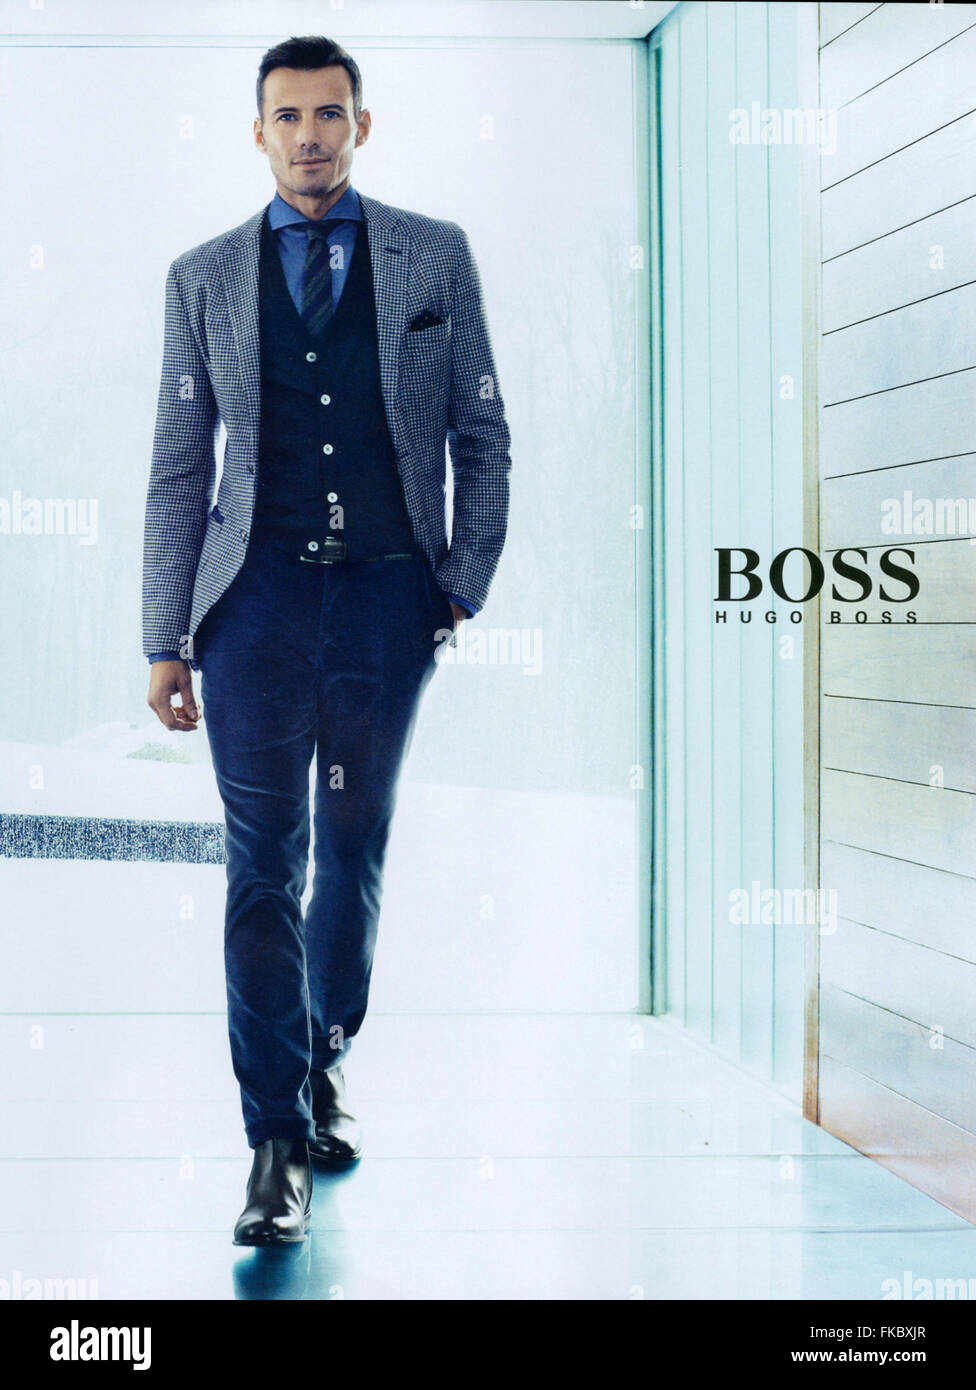 2010s UK Hugo Boss Magazine Advert Stock Photo - Alamy